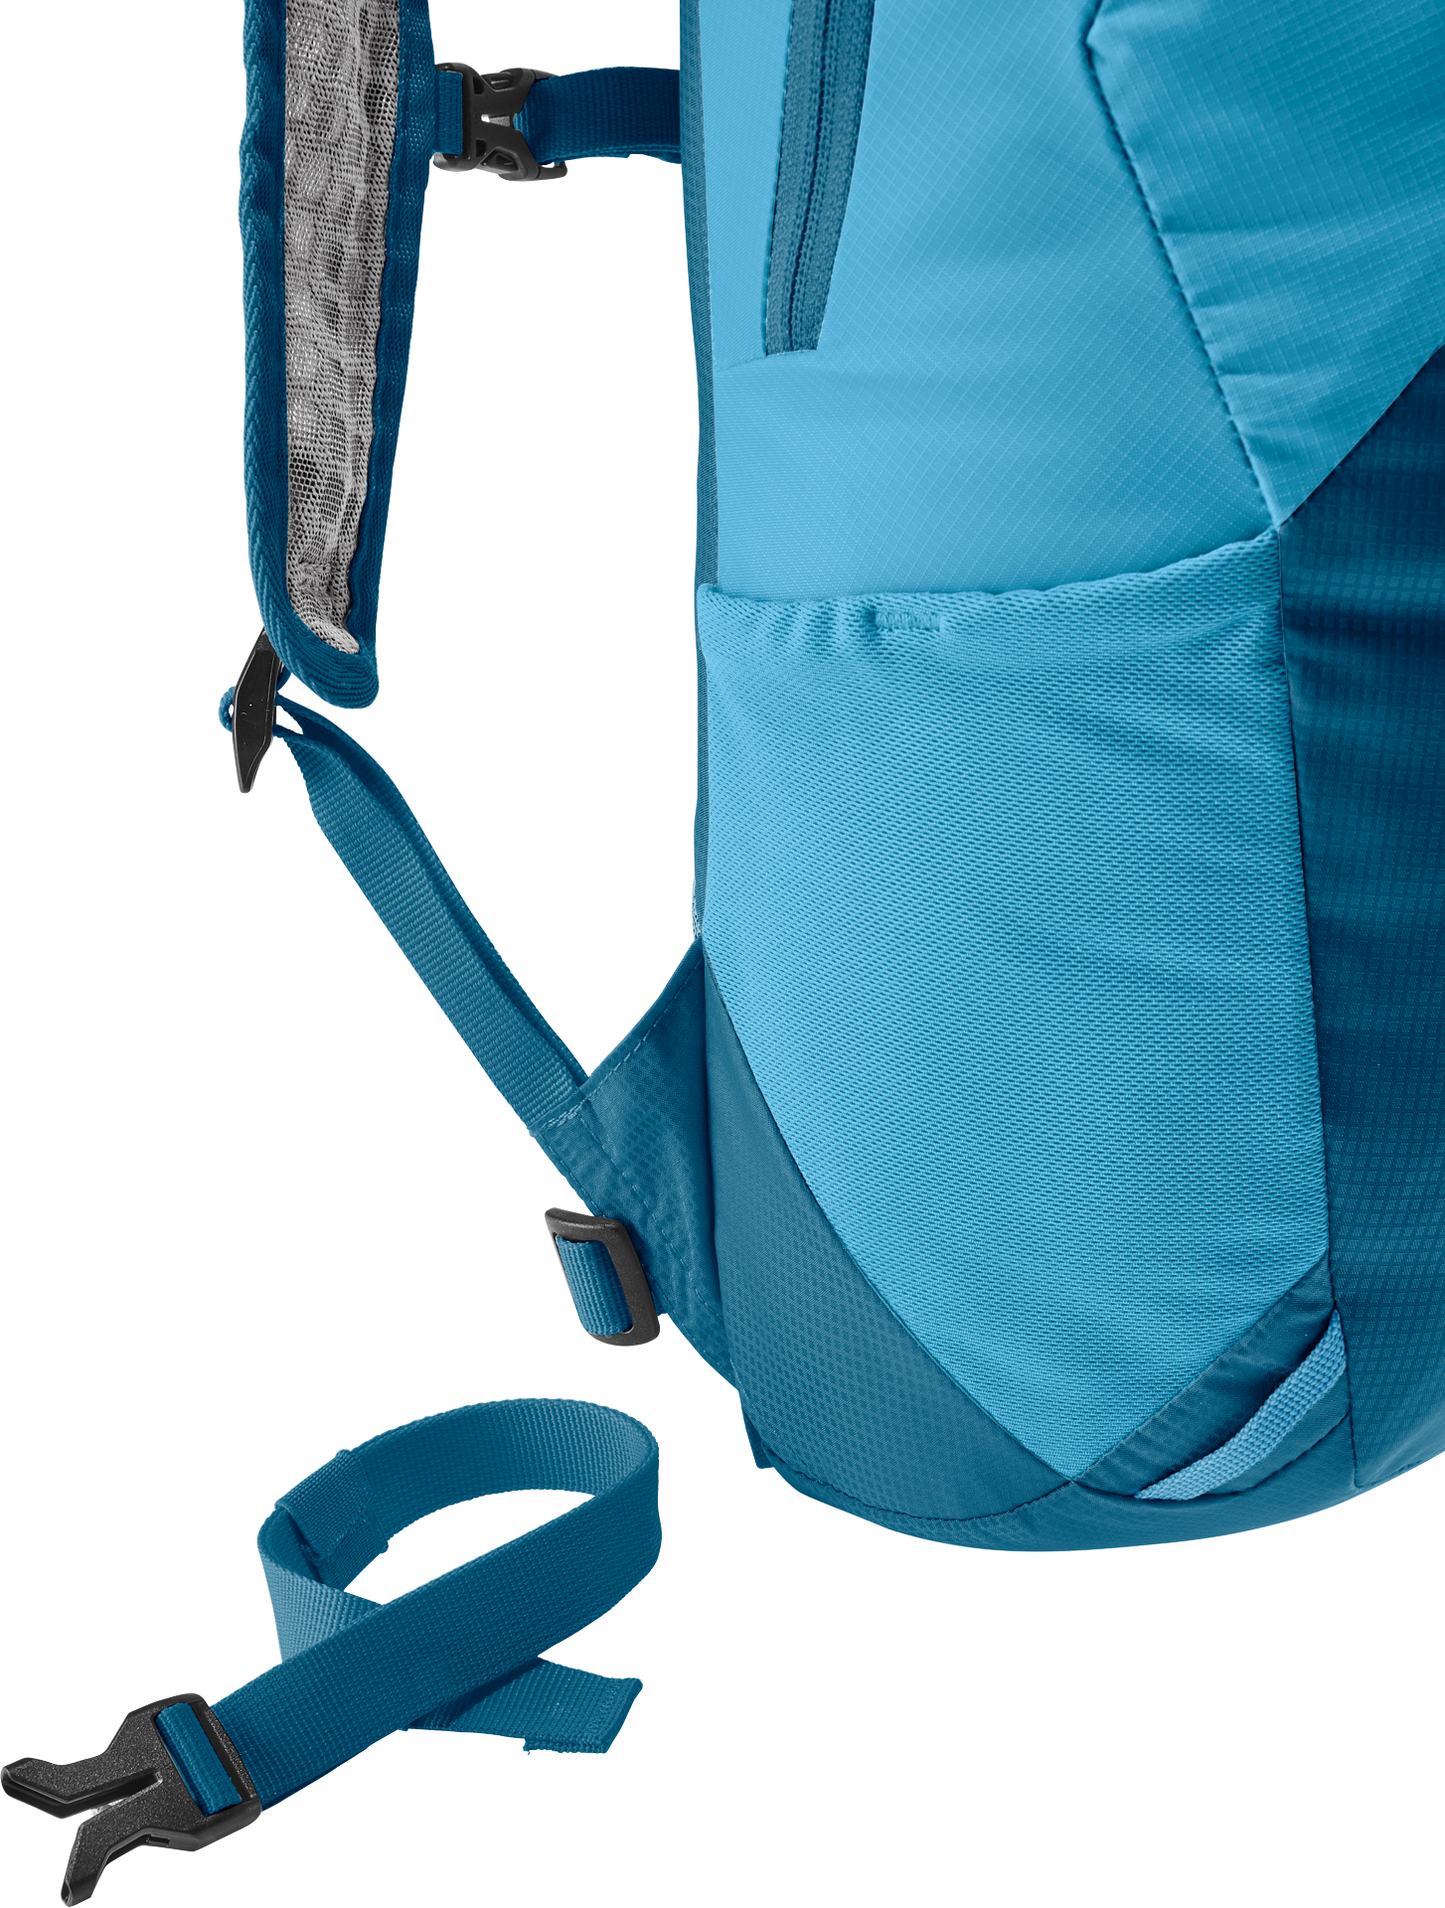 Deuter Speed Lite Backpack (13L)